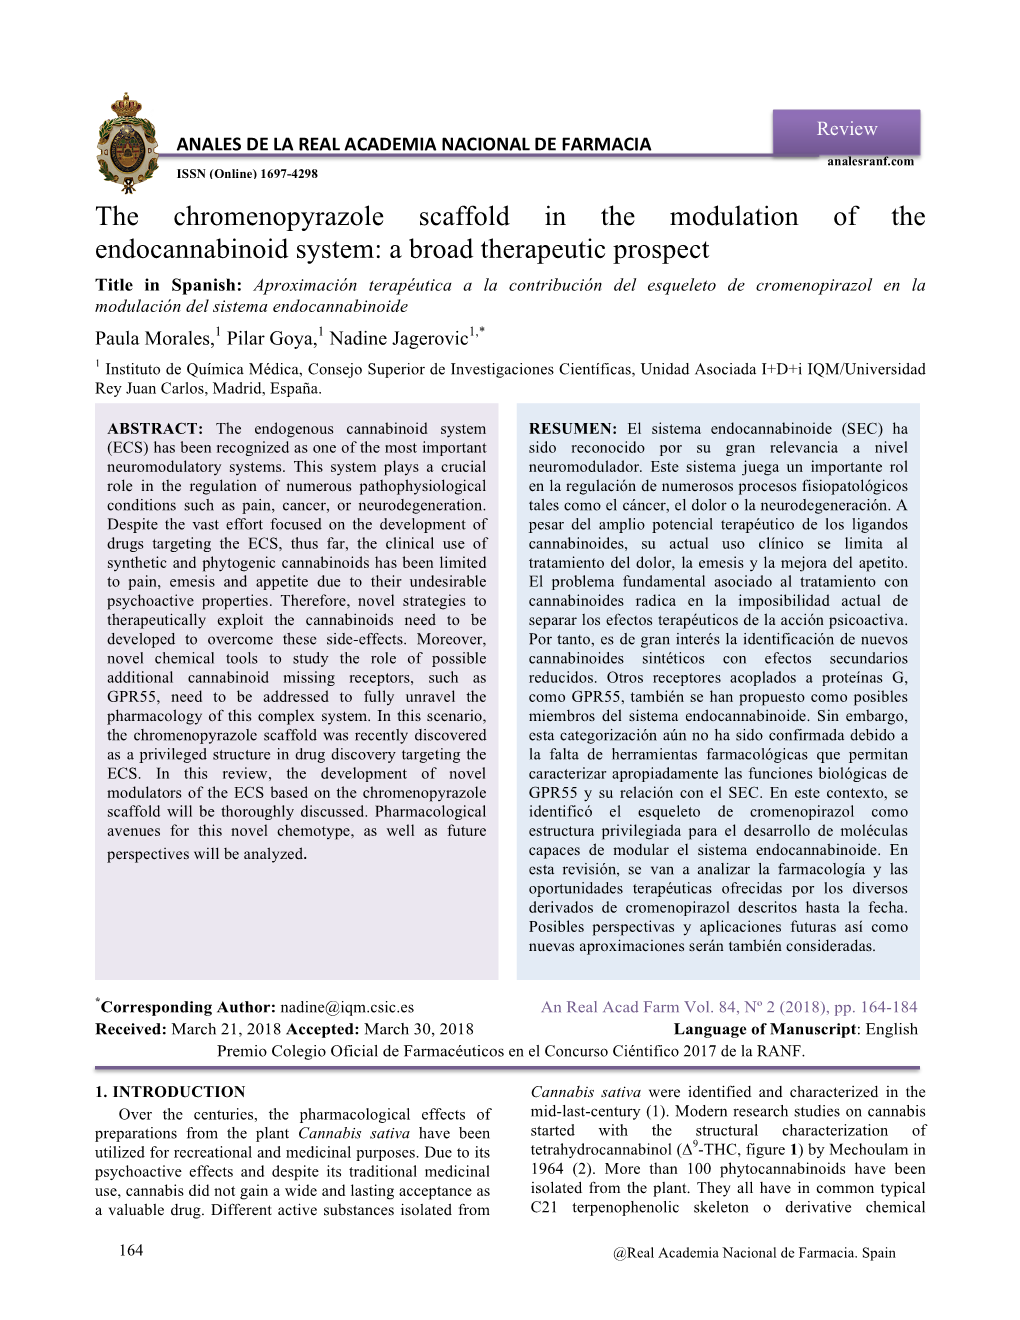 The Chromenopyrazole Scaffold in the Modulation of the Endocannabinoid